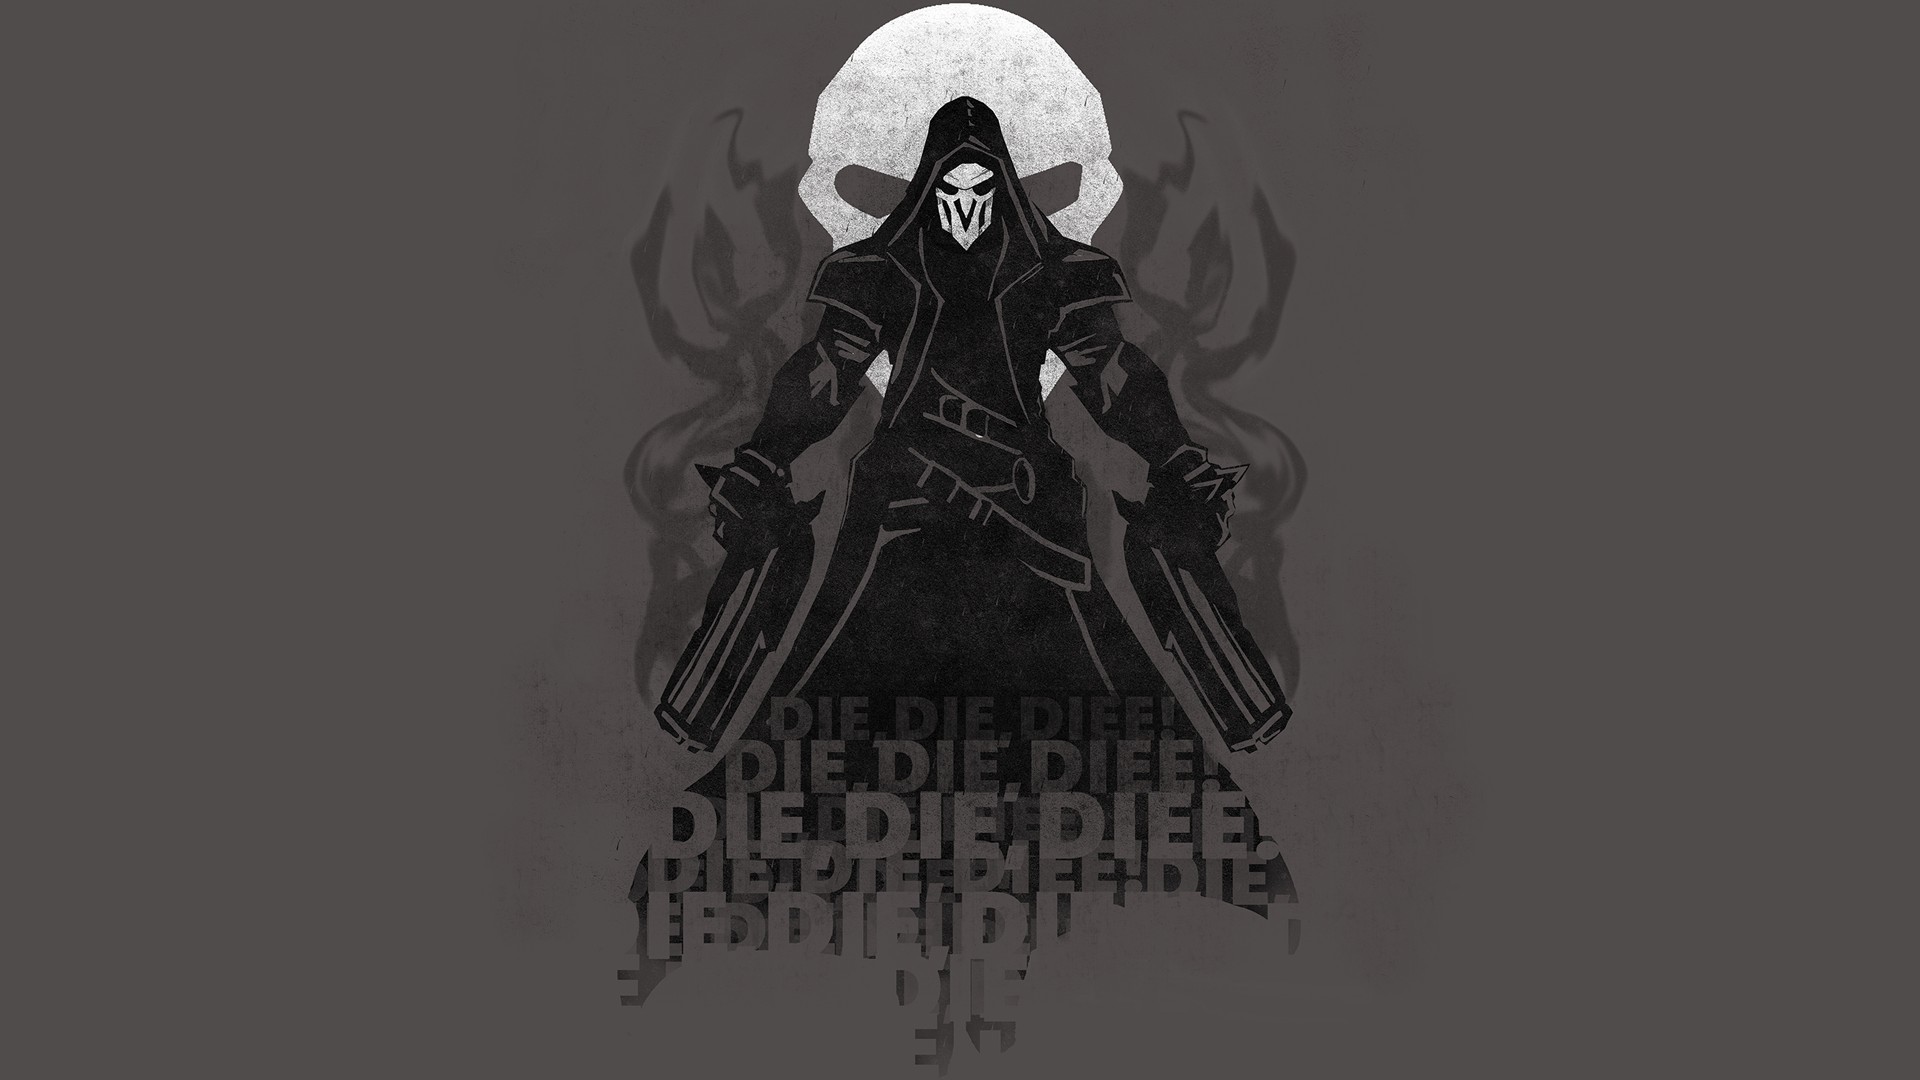 Desktop Wallpaper Reaper Digital Art Overwatch Online Game Hd Image Picture Background 5aa5e1